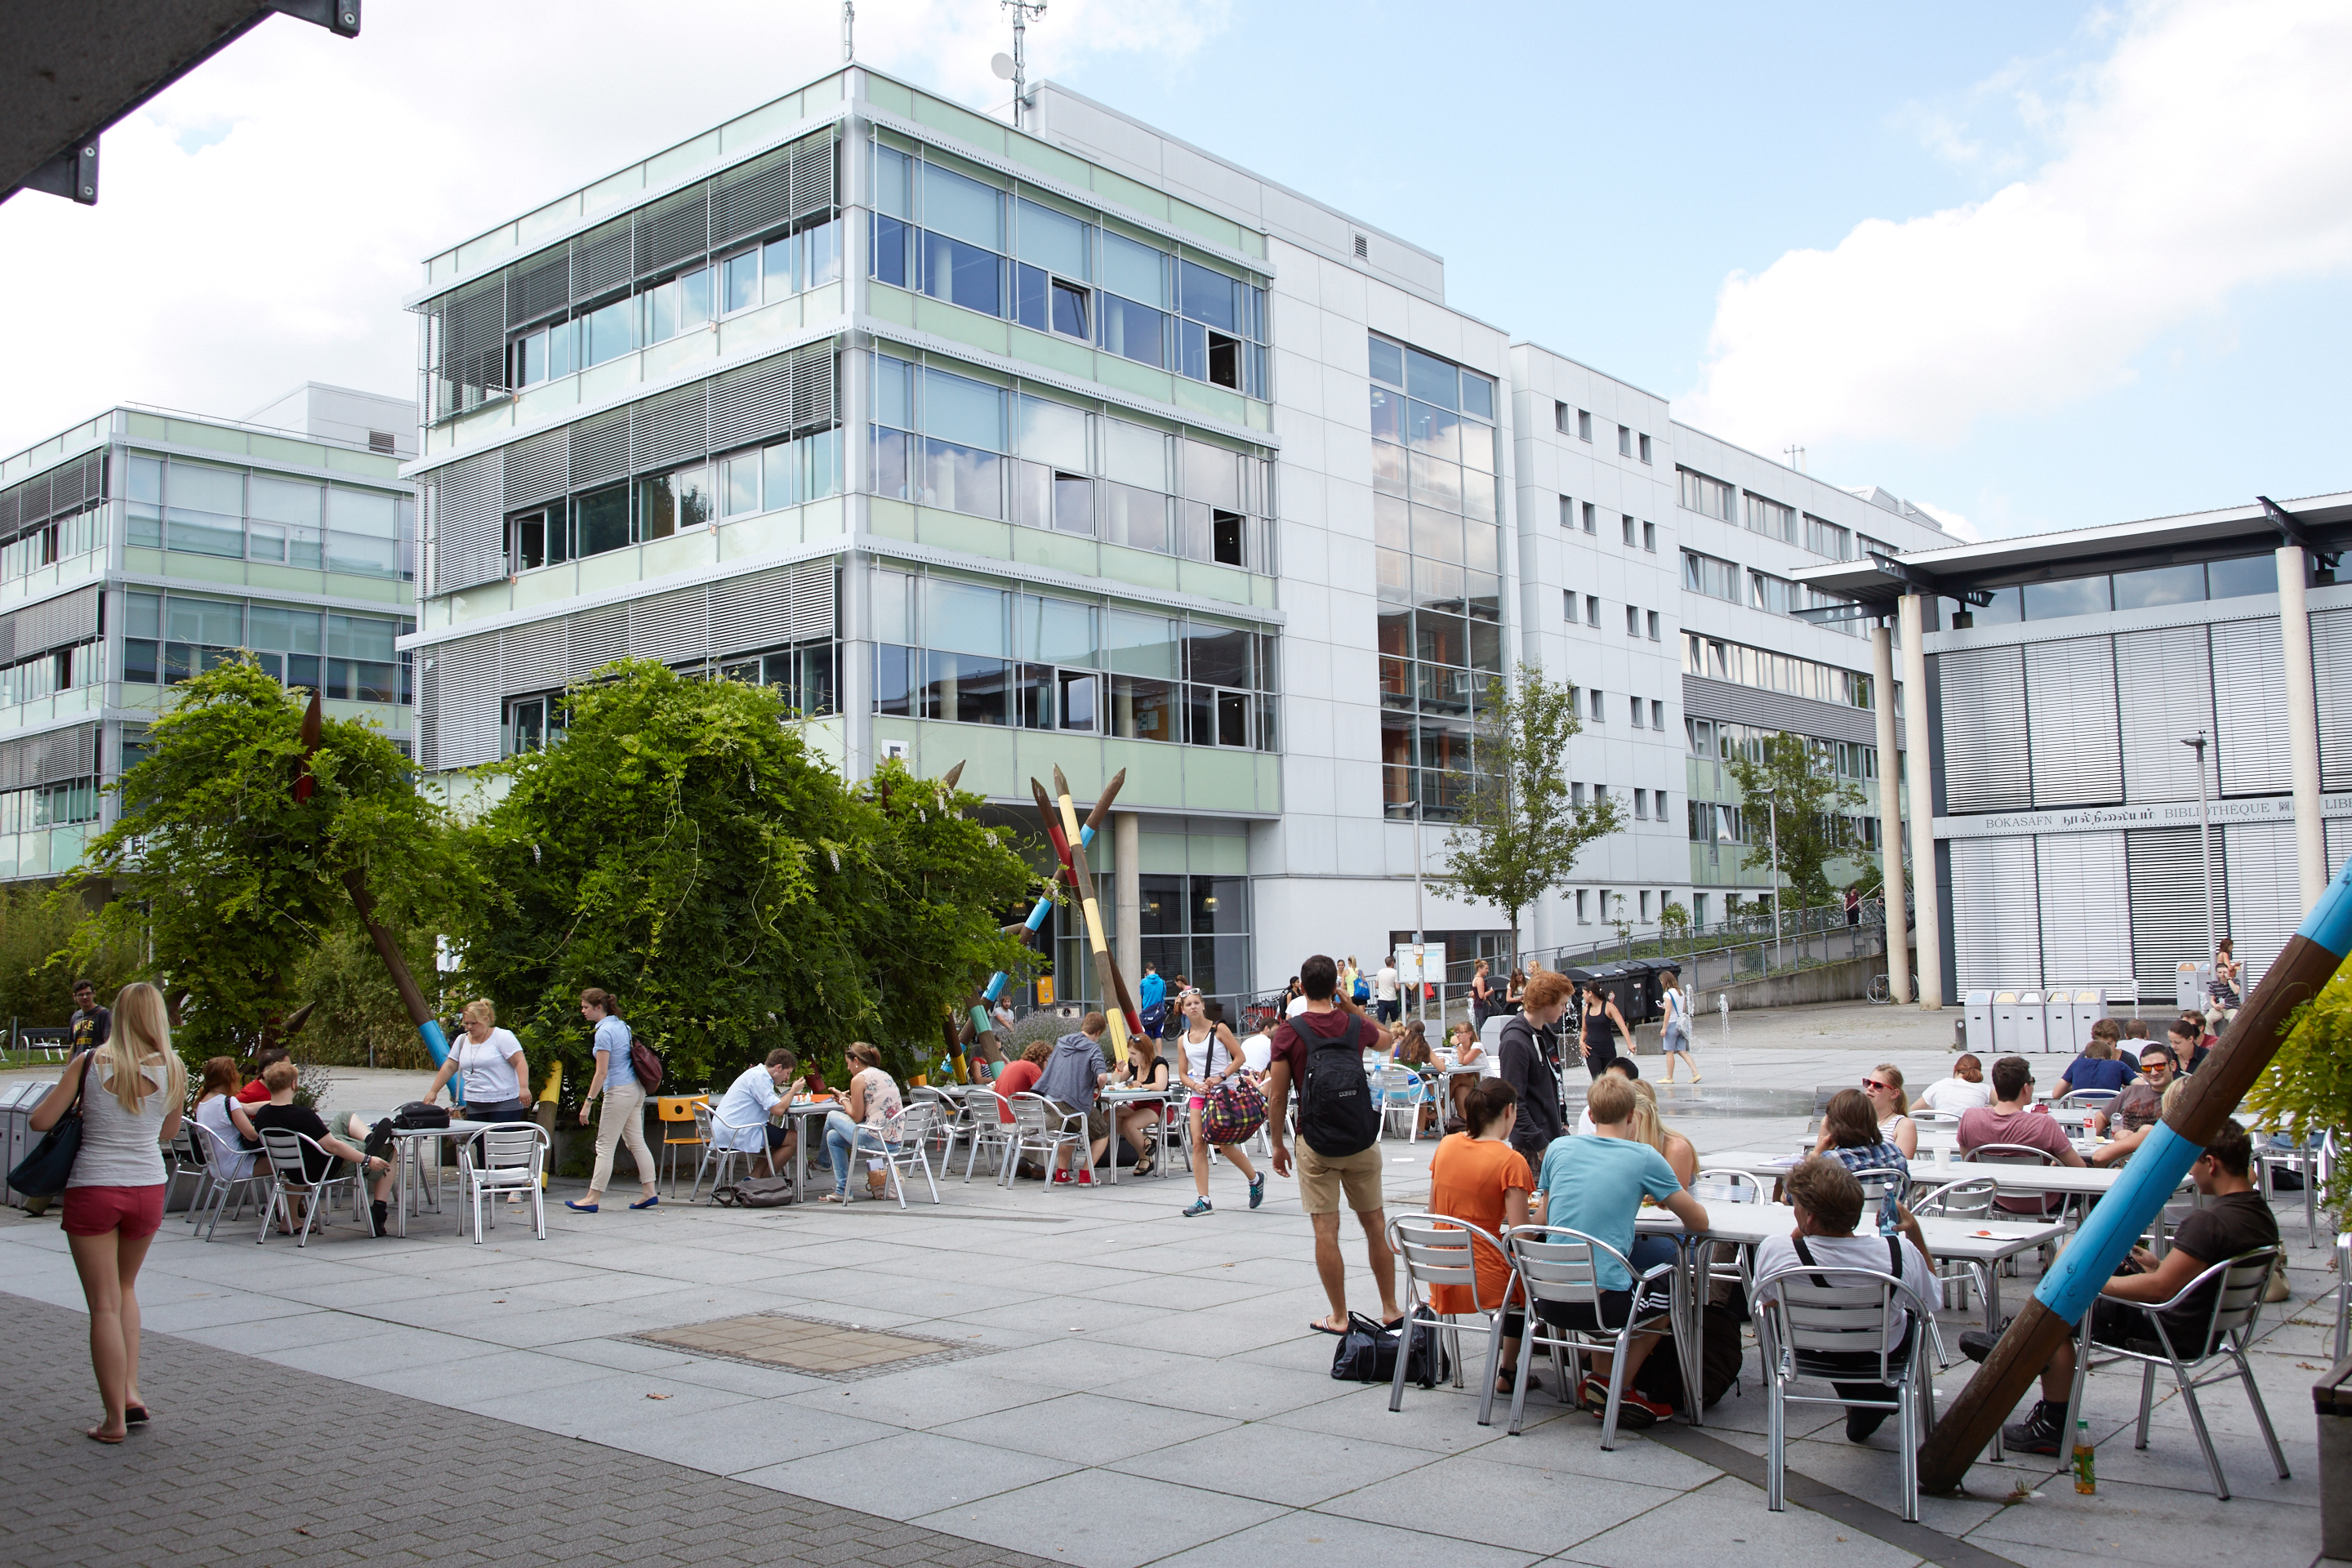 A picture of the University of Koblenz-Landau, Germany